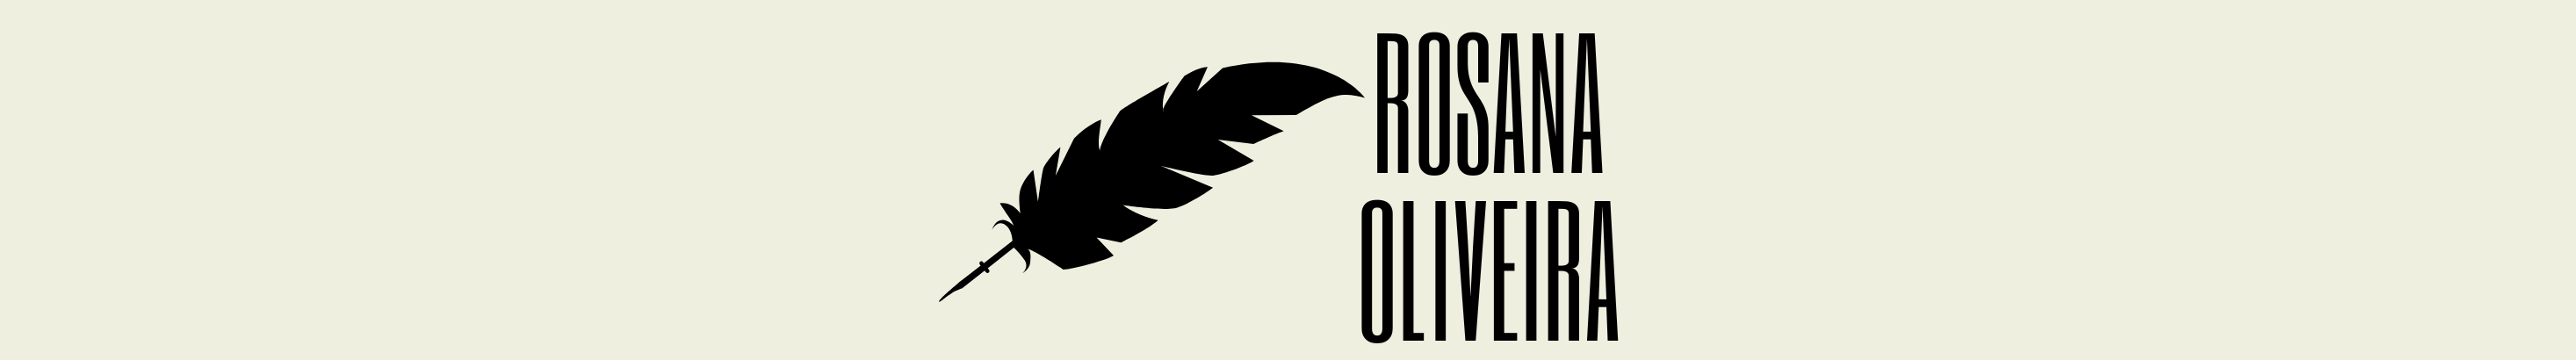 Rosana Oliveira's profile banner